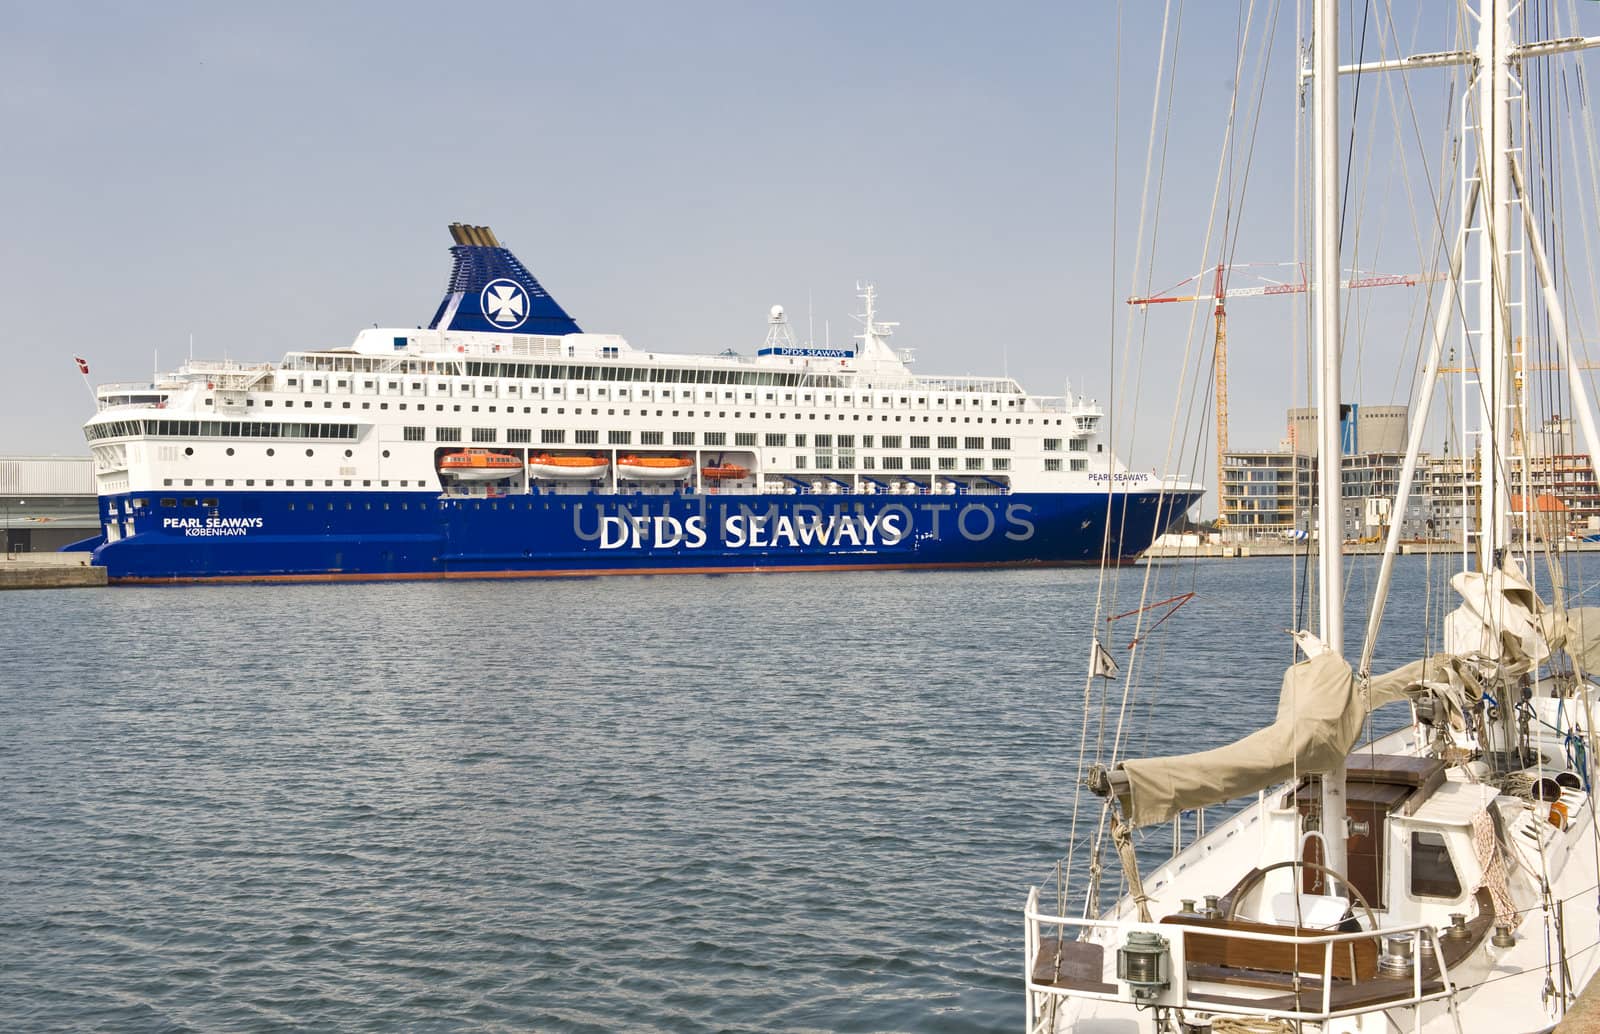 Scandinavian cruise ship by Alenmax